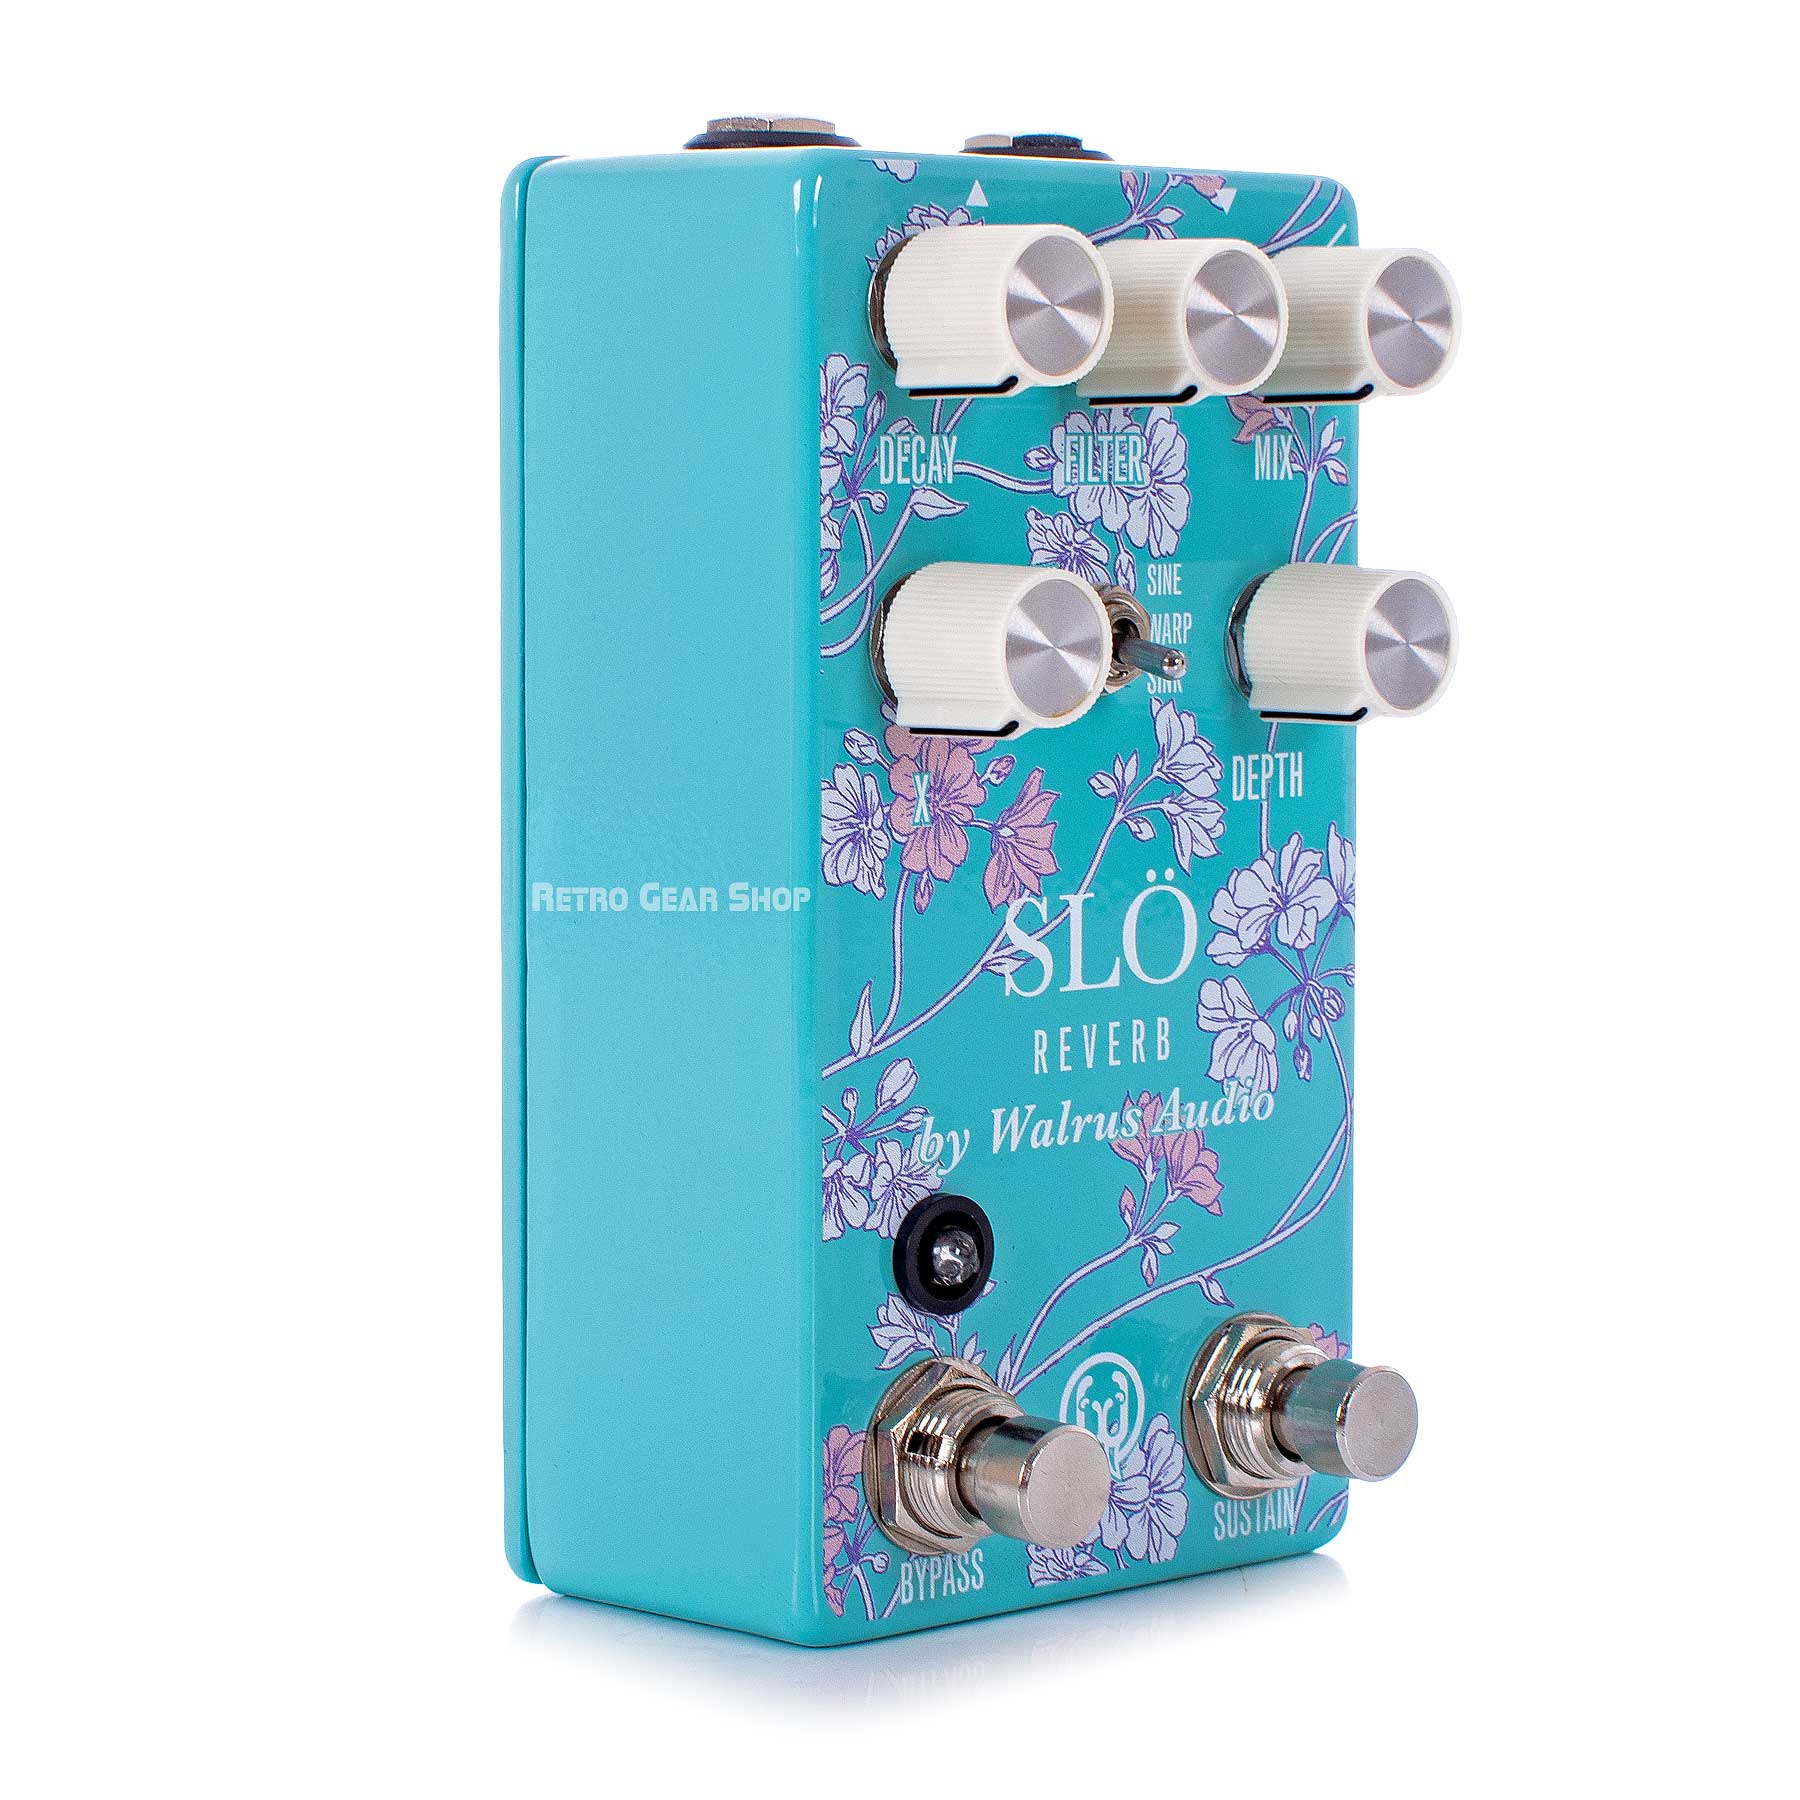 Walrus Audio Slö Floral Limited Edition – Retro Gear Shop